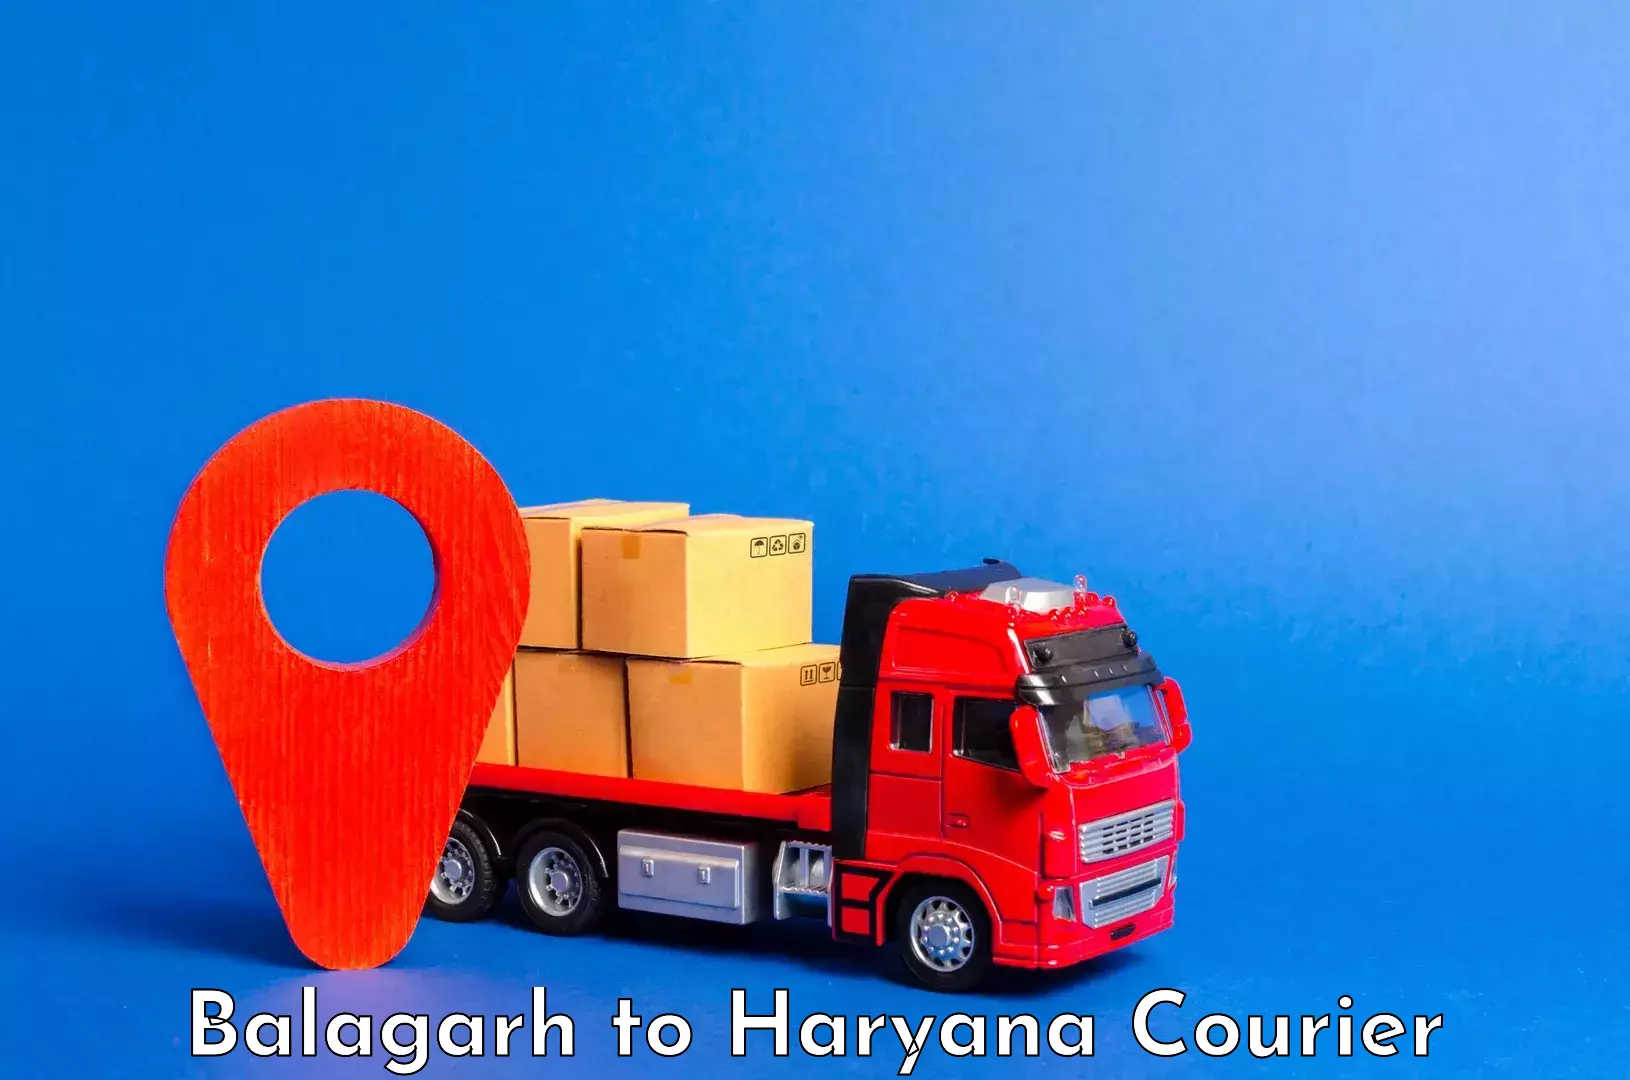 Baggage transport network Balagarh to Bilaspur Haryana